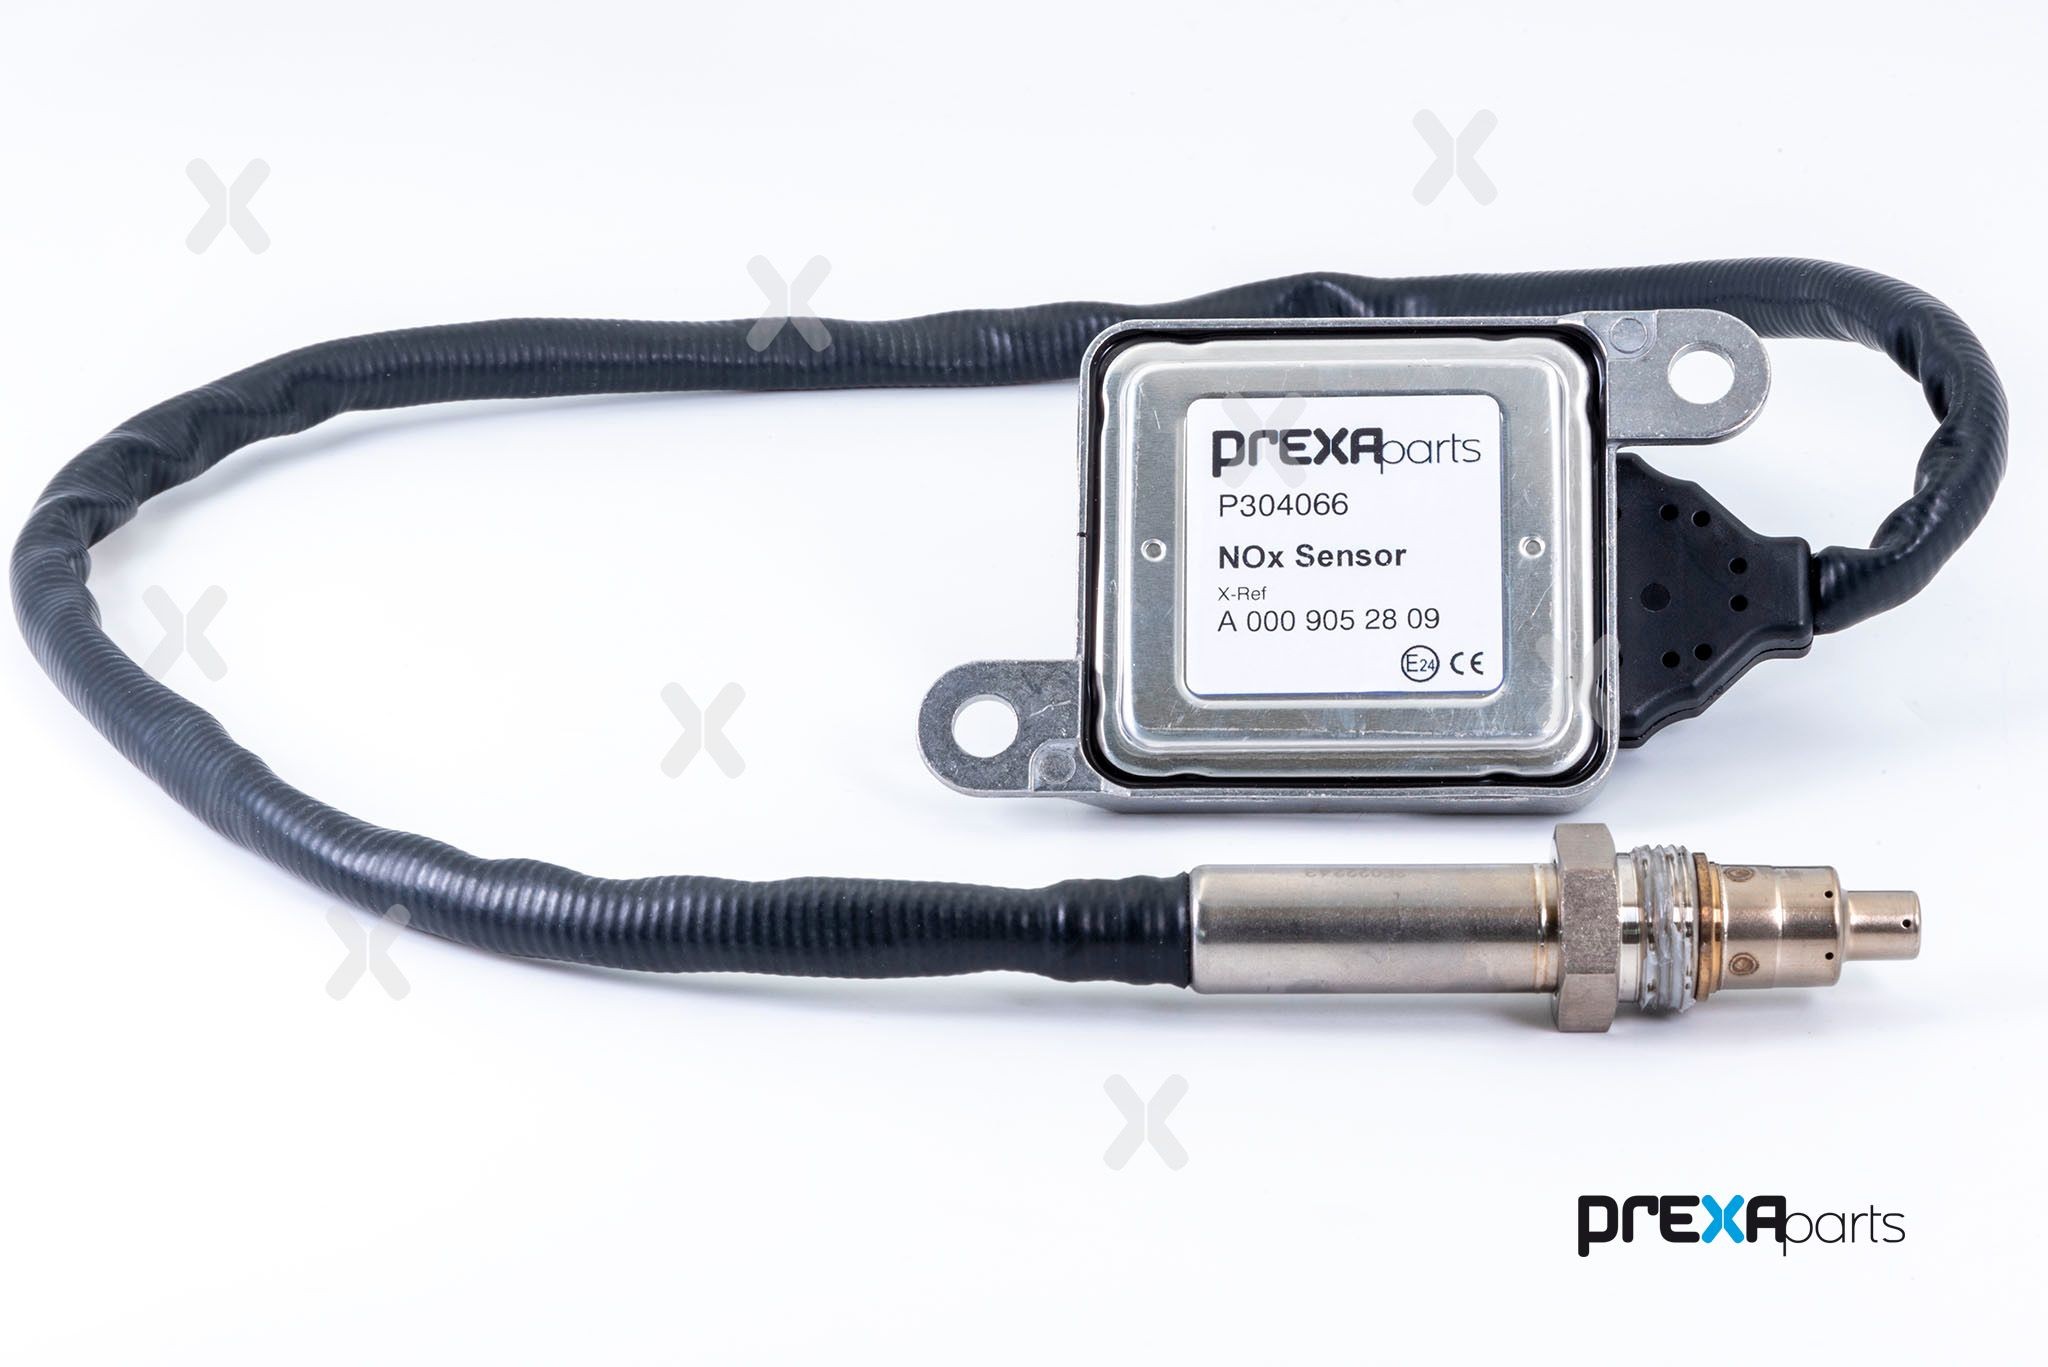 PREXAparts P304066 NOx Sensor, urea injection 000 905 28 09